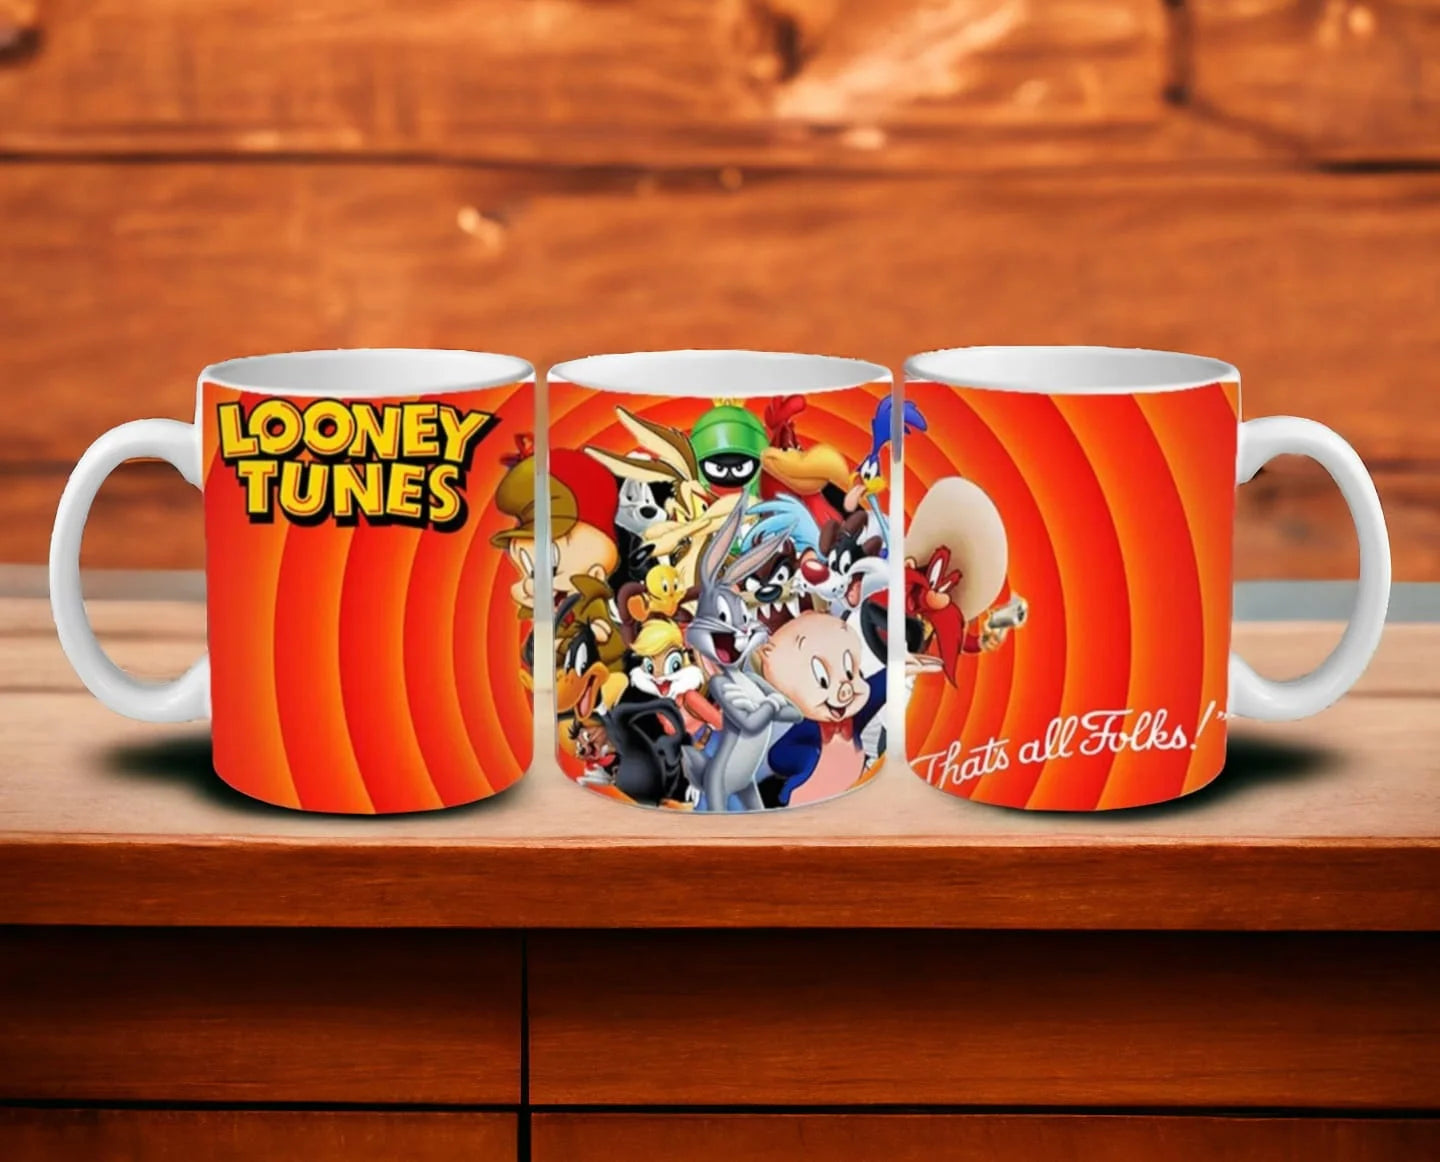 Cana personalizată, Looney Tunes Model 1, Ceramica, Alb, 350 ml